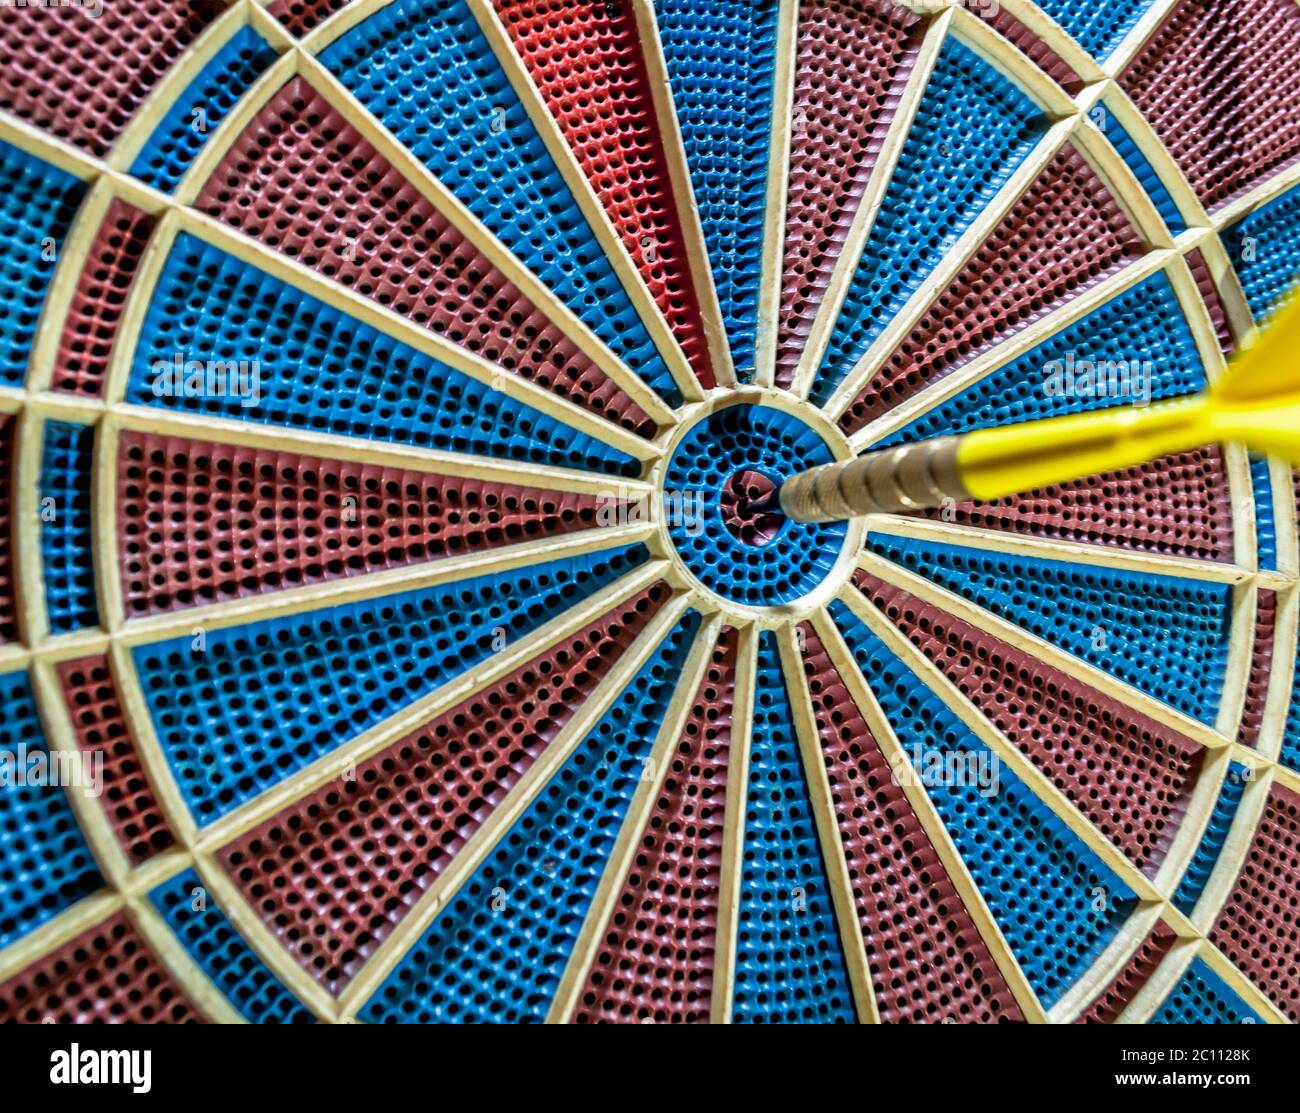 Dart in bulls eye of blurred dartboard Stock Photo